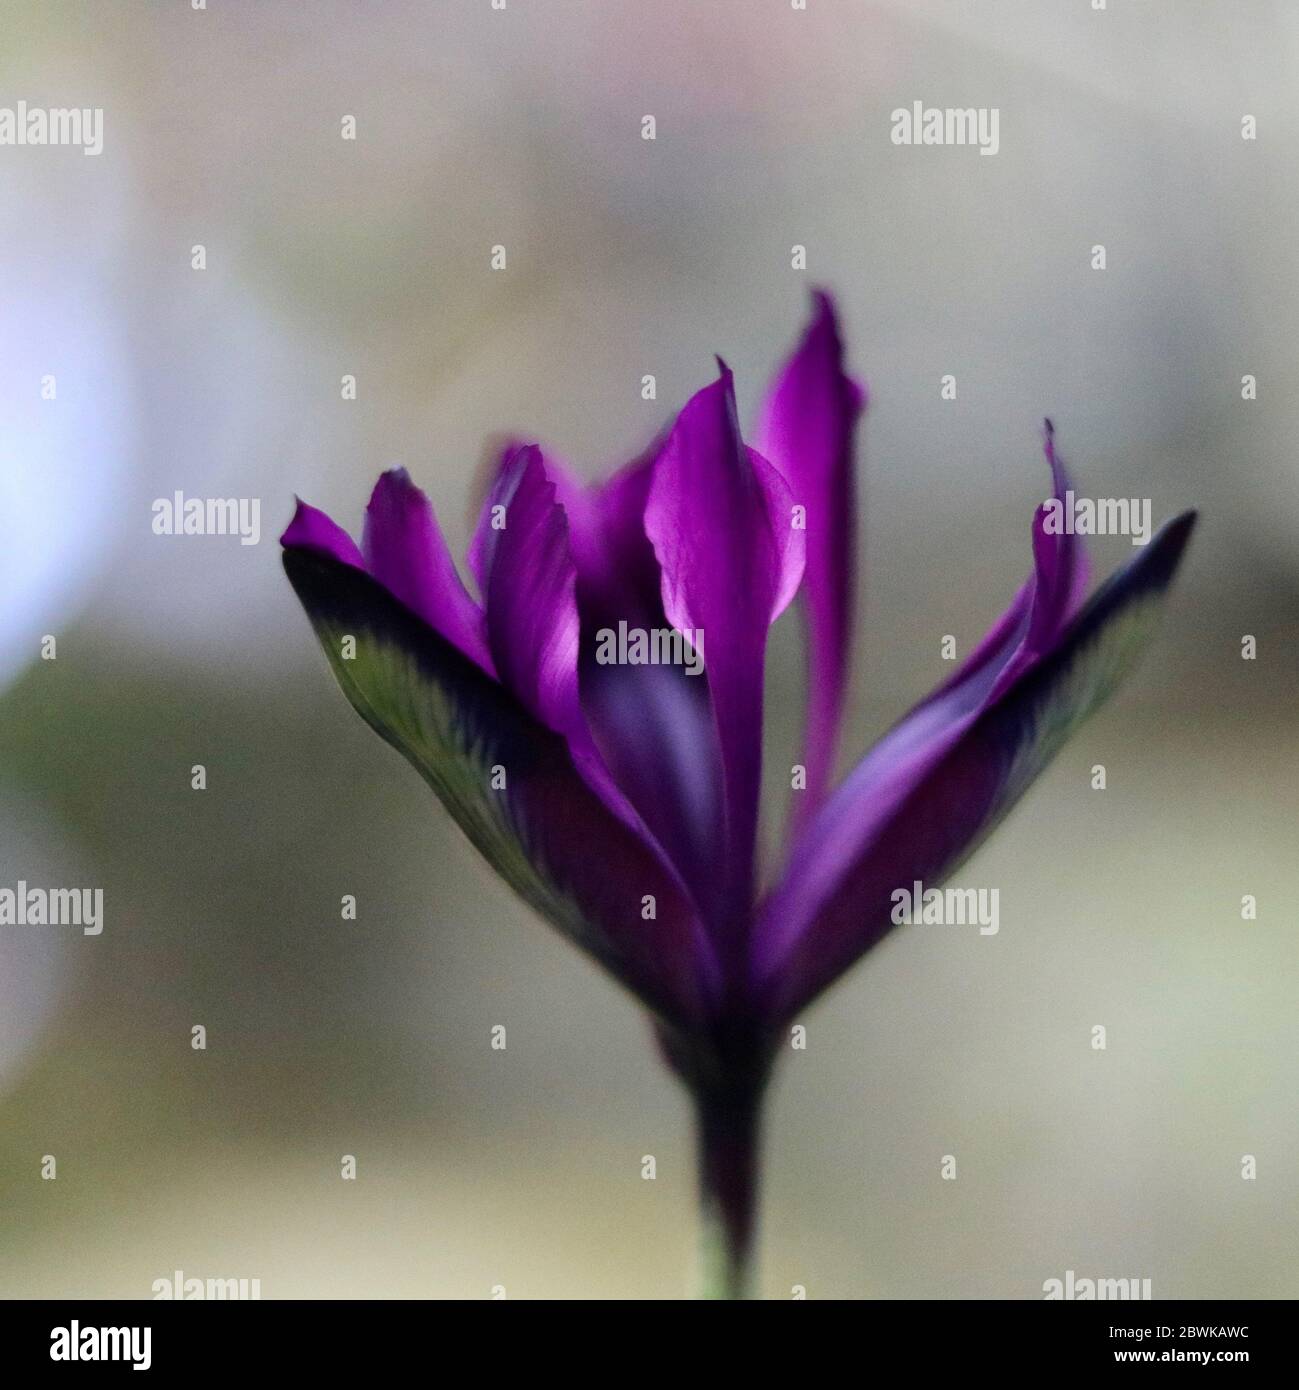 Beautiful softly blurred image of purple iris against grey background Stock Photo